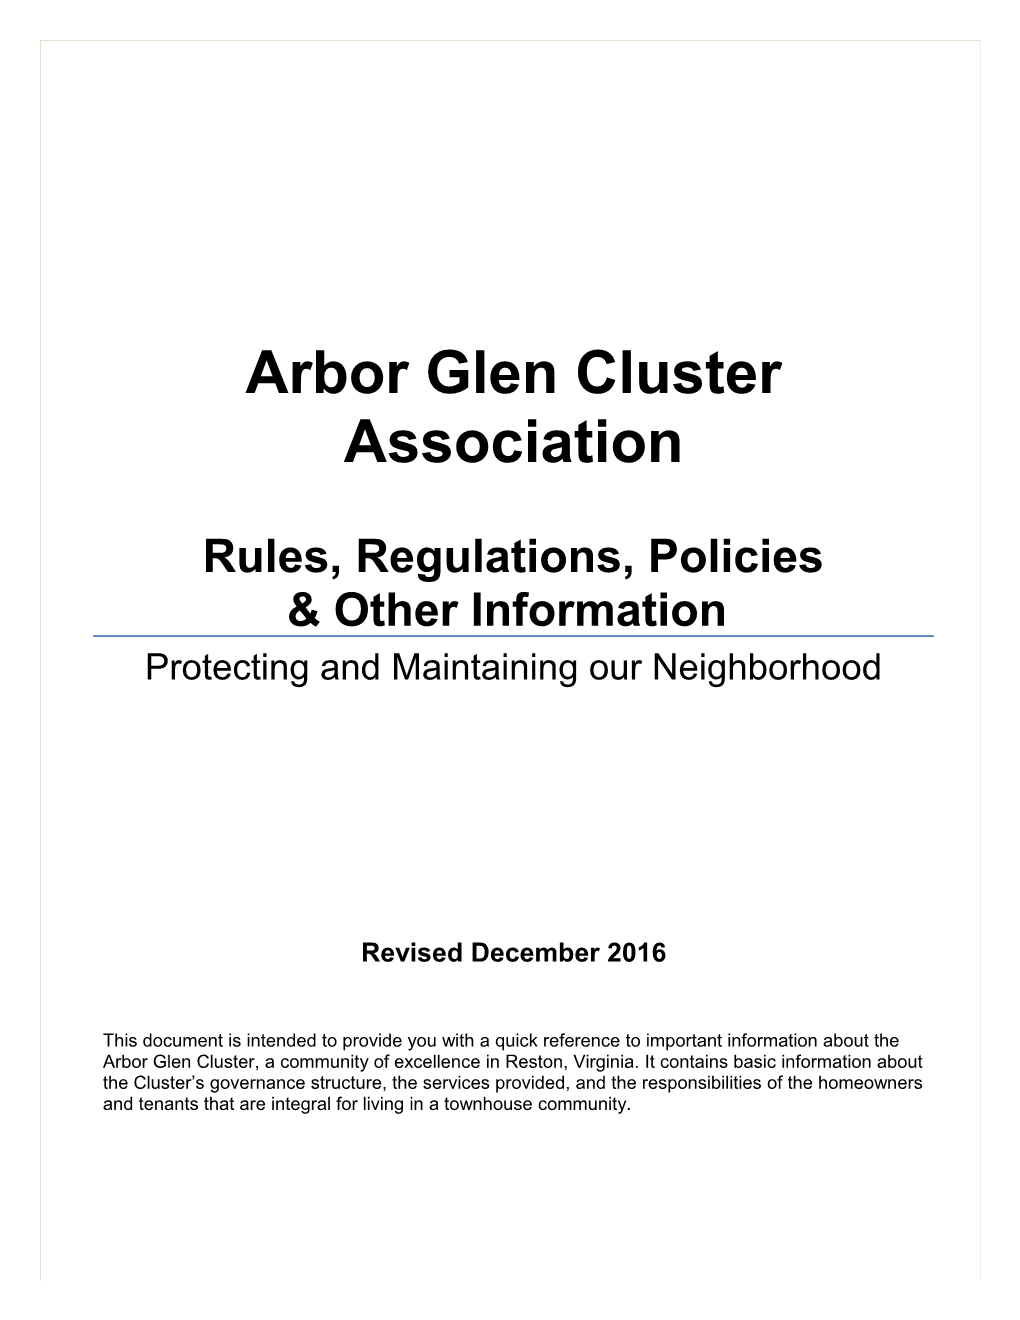 Arbor Glen Cluster Association Information Guide and Rules & Regulations